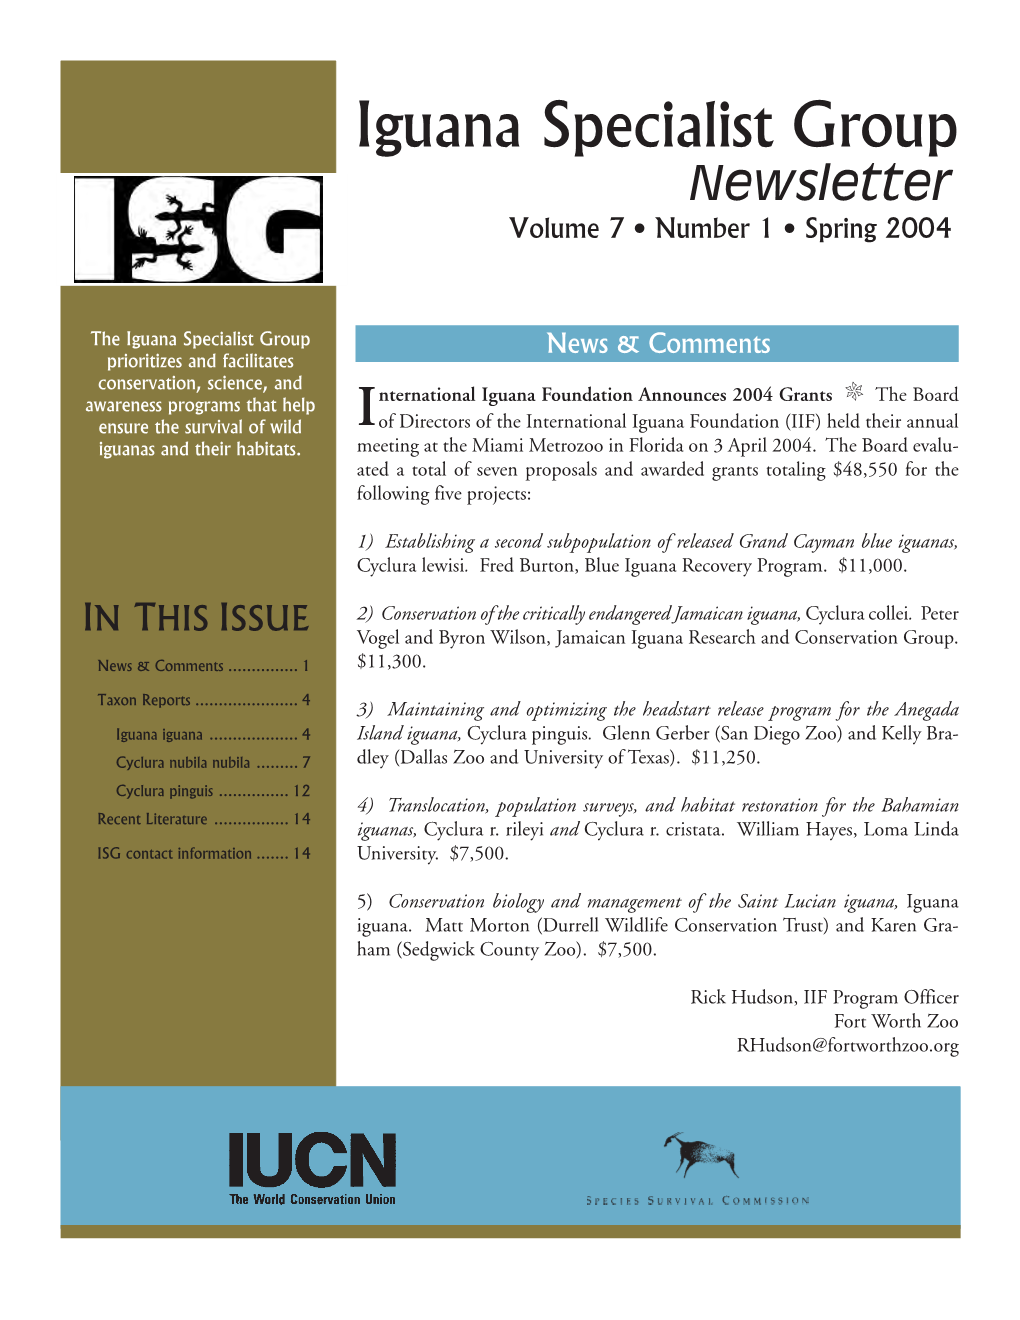 ISG News 5(1)